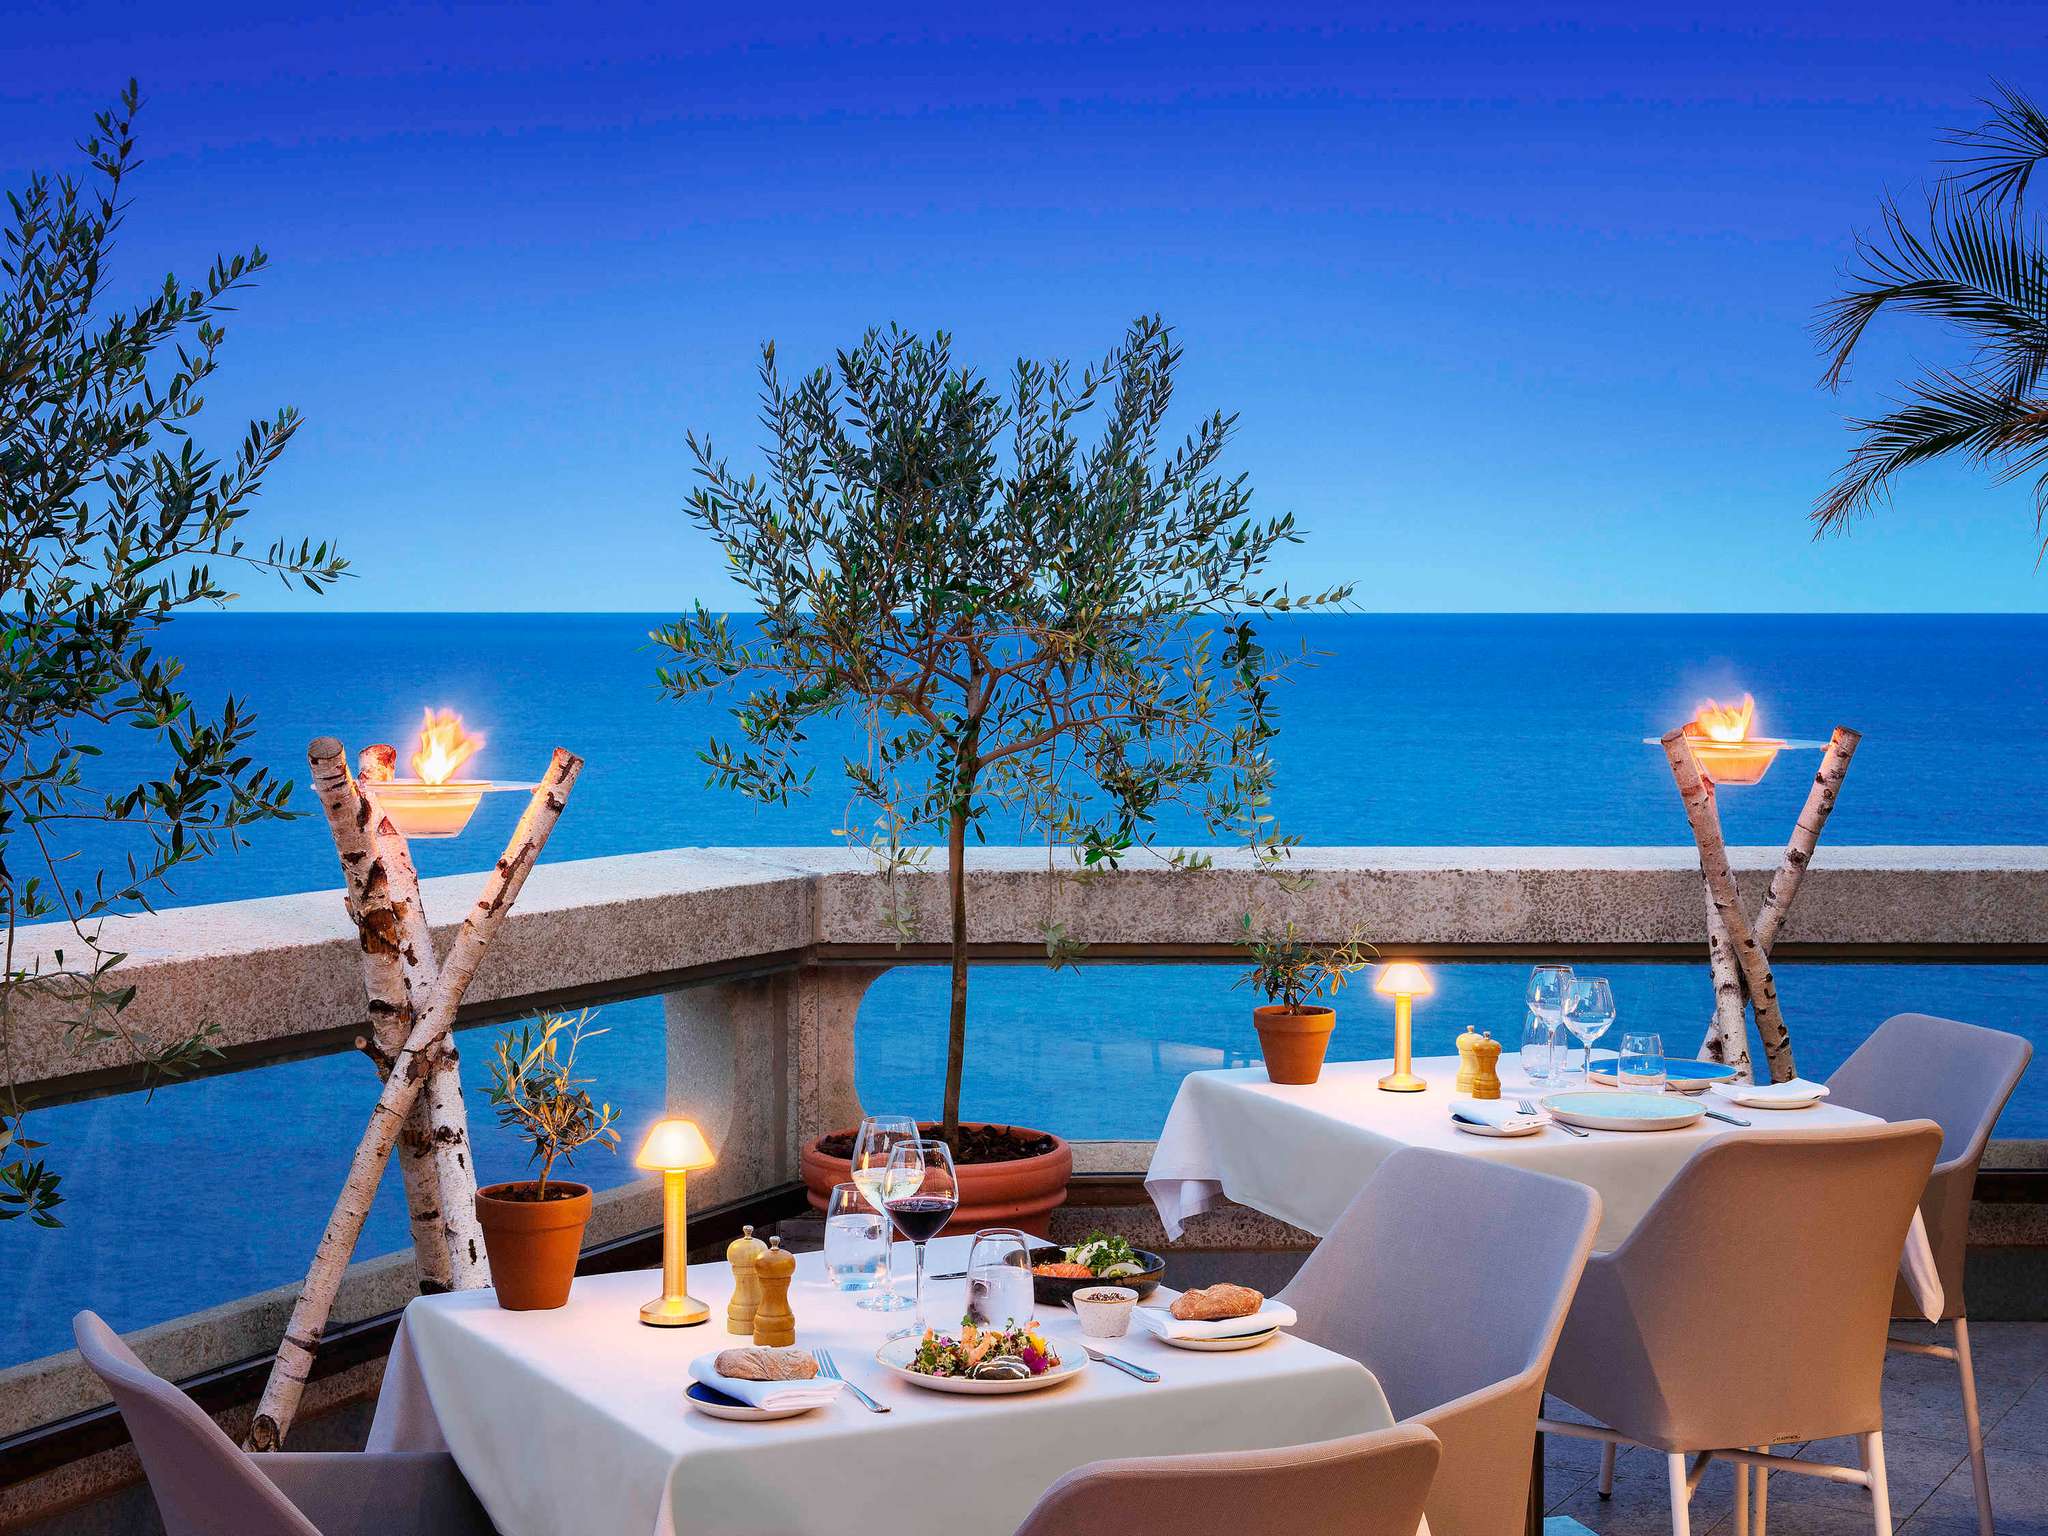 Horizon Deck Restaurant, Monte Carlo - Restaurants ALL Accor